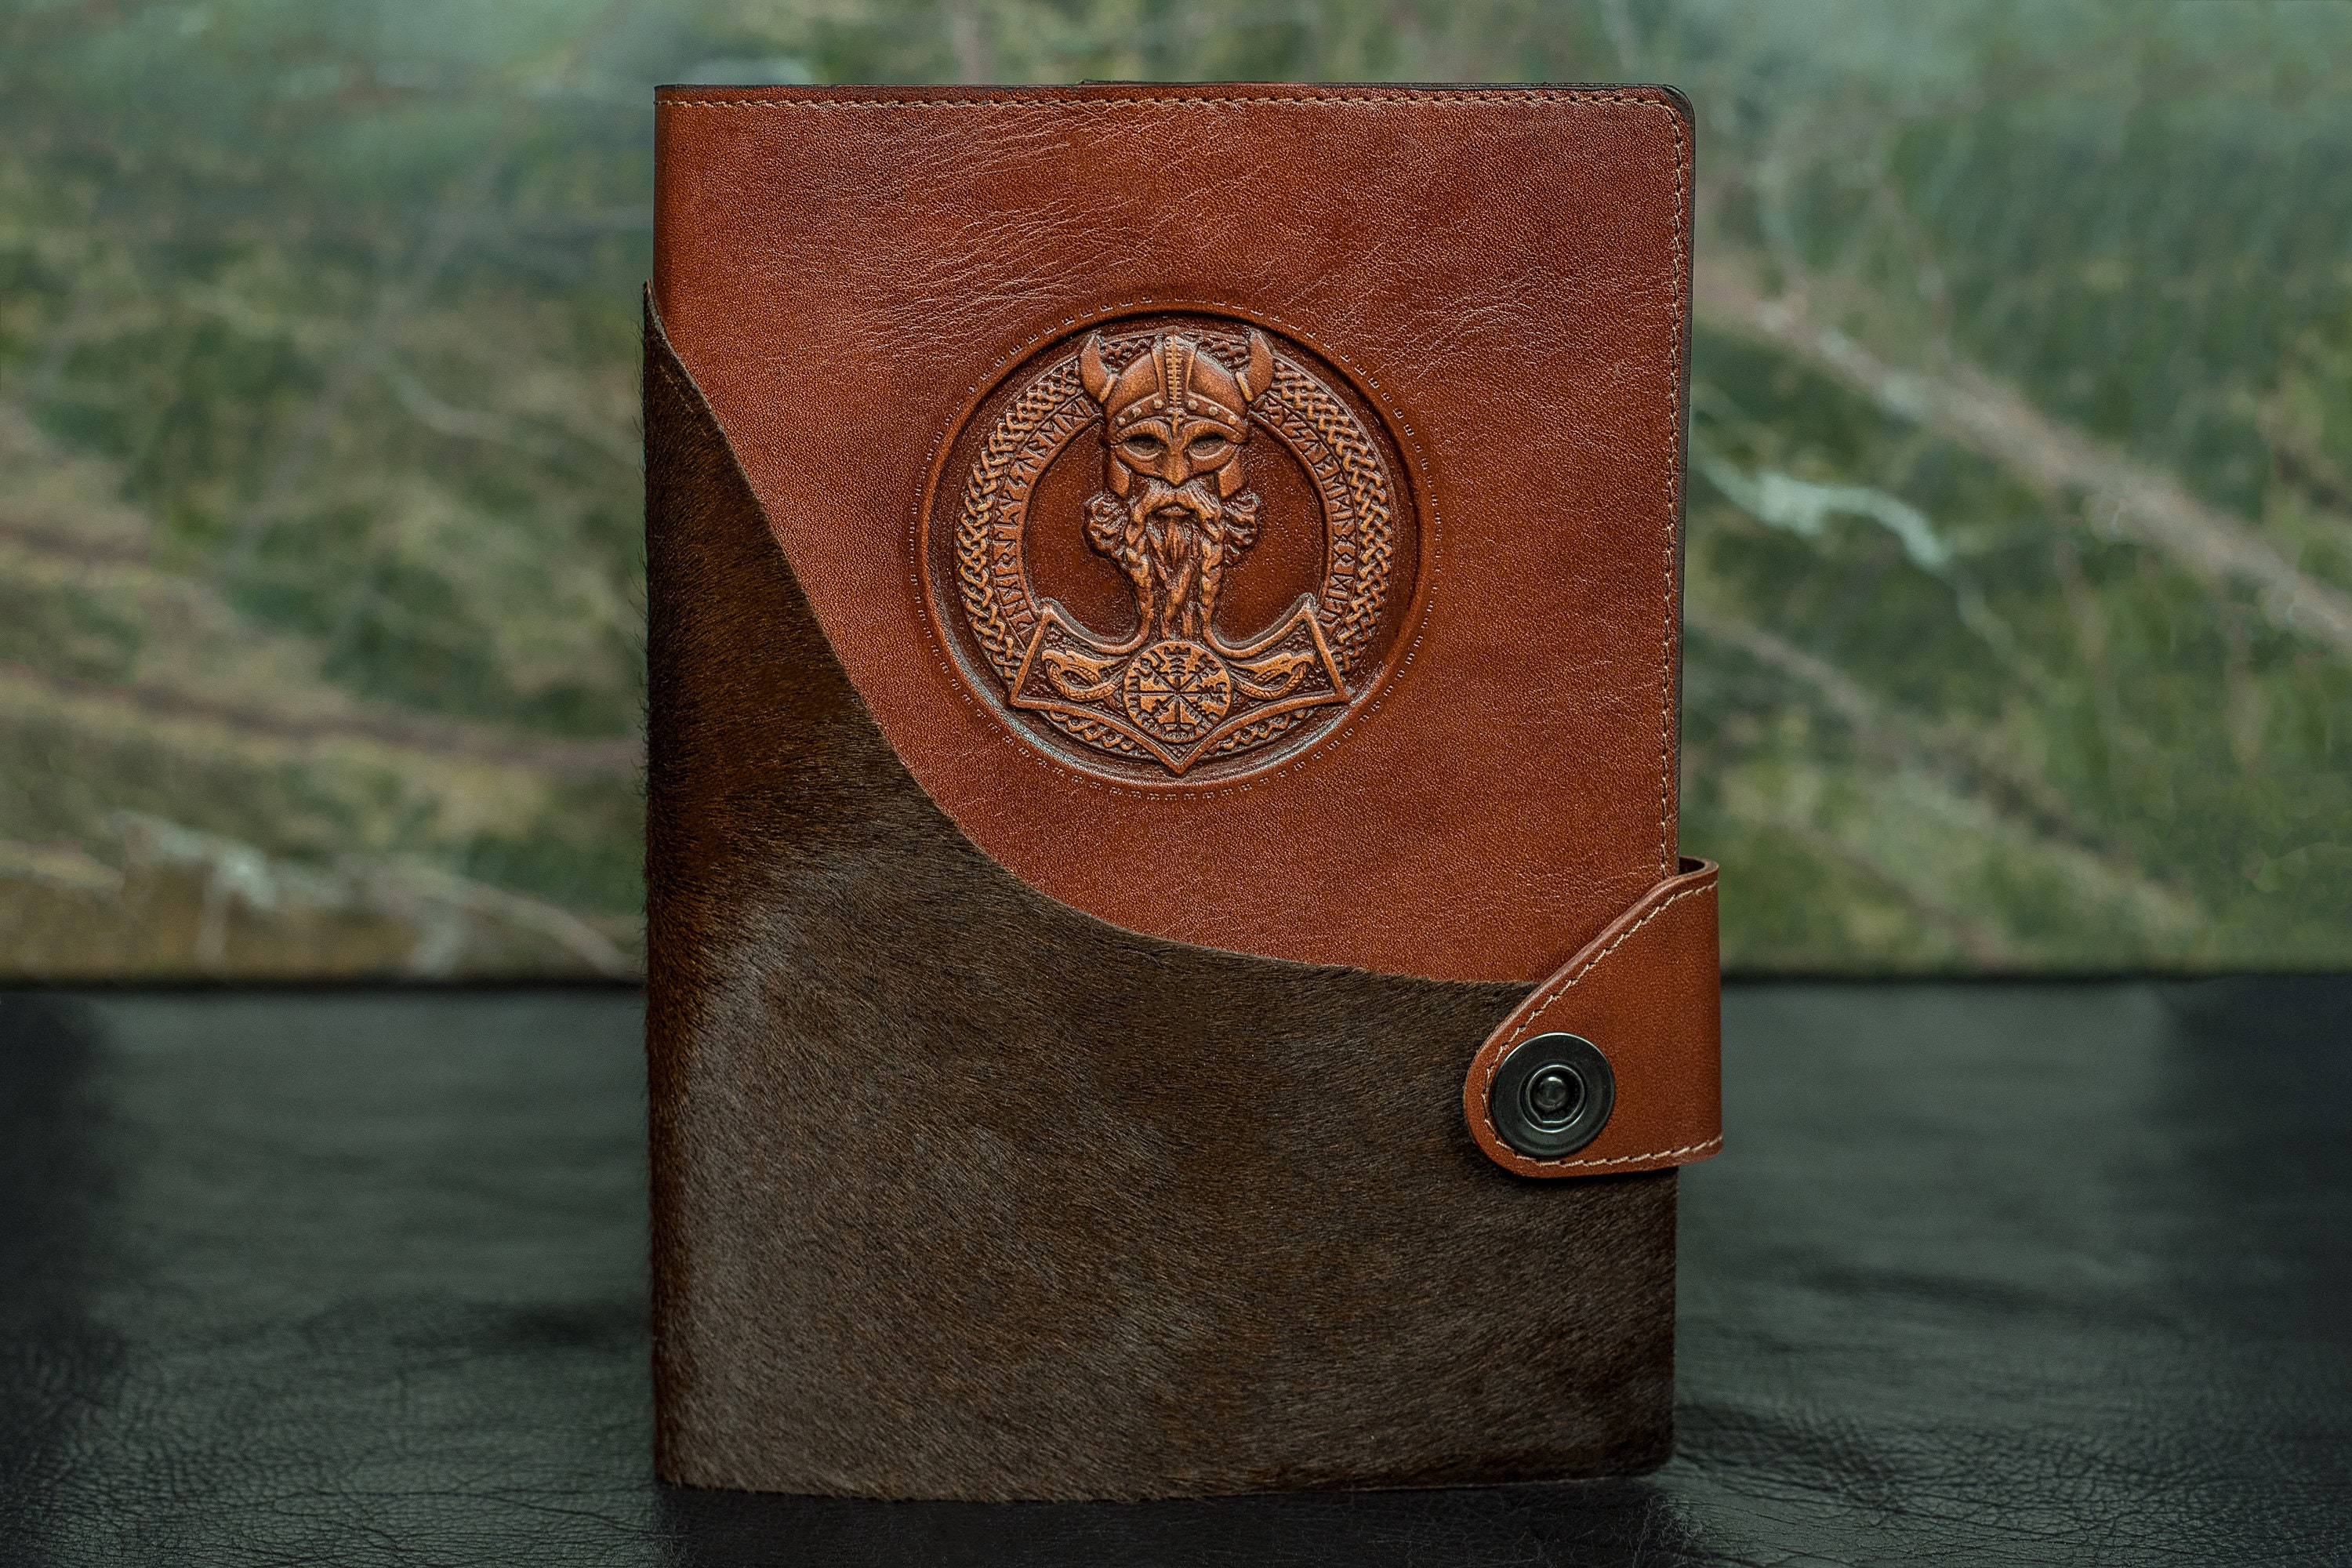 viking travel journal